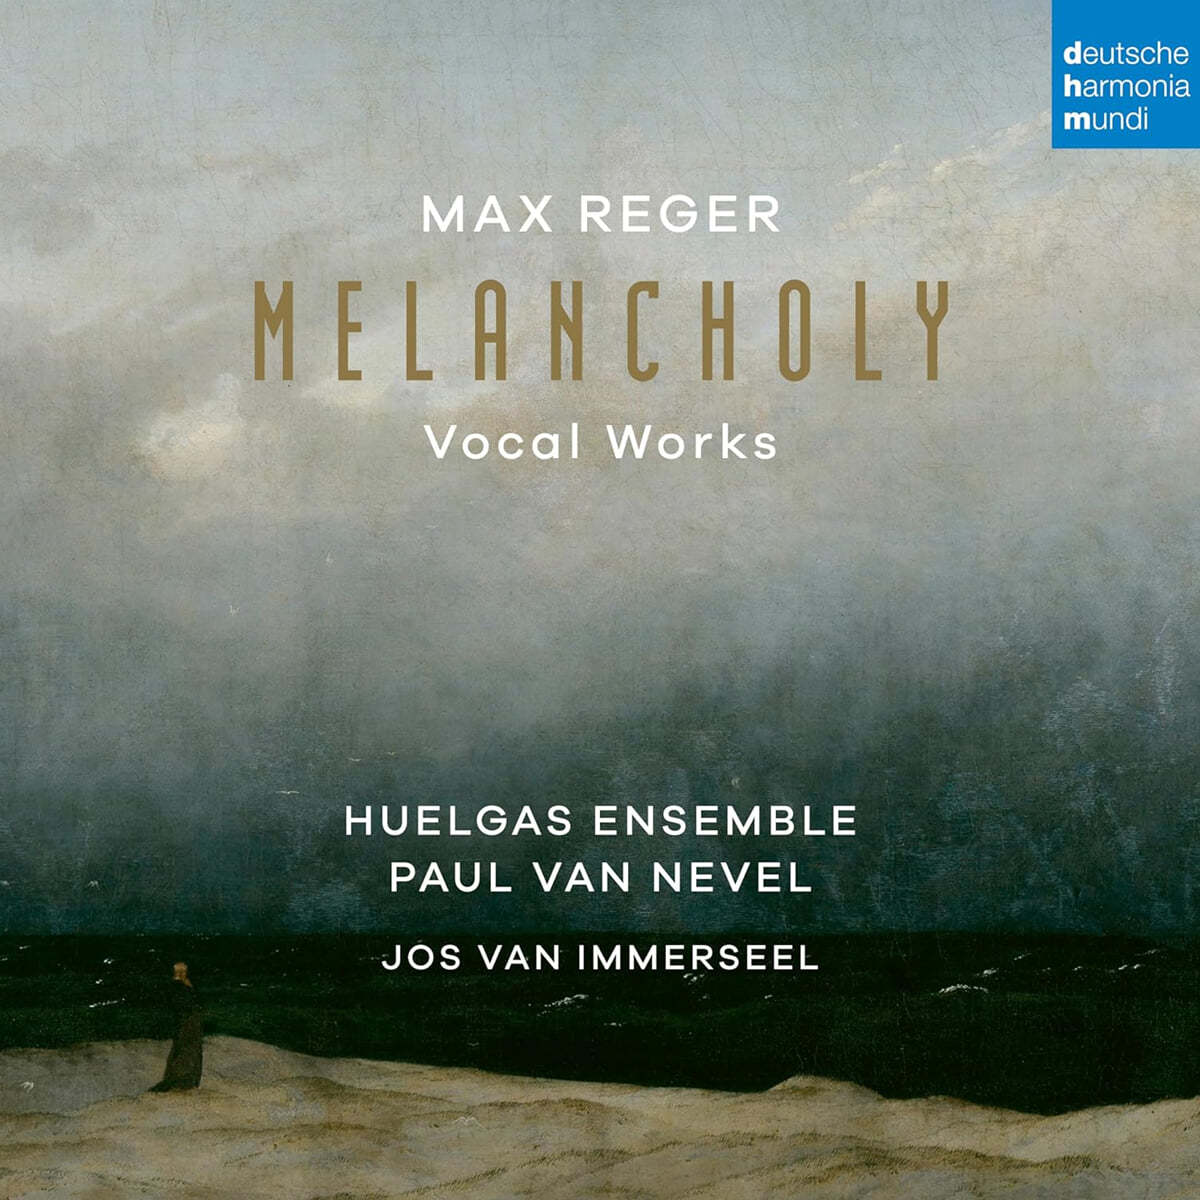 Huelgas-Ensemble 레거: 합창 작품집 (Max Reger: Melancholy - Vocal Works)